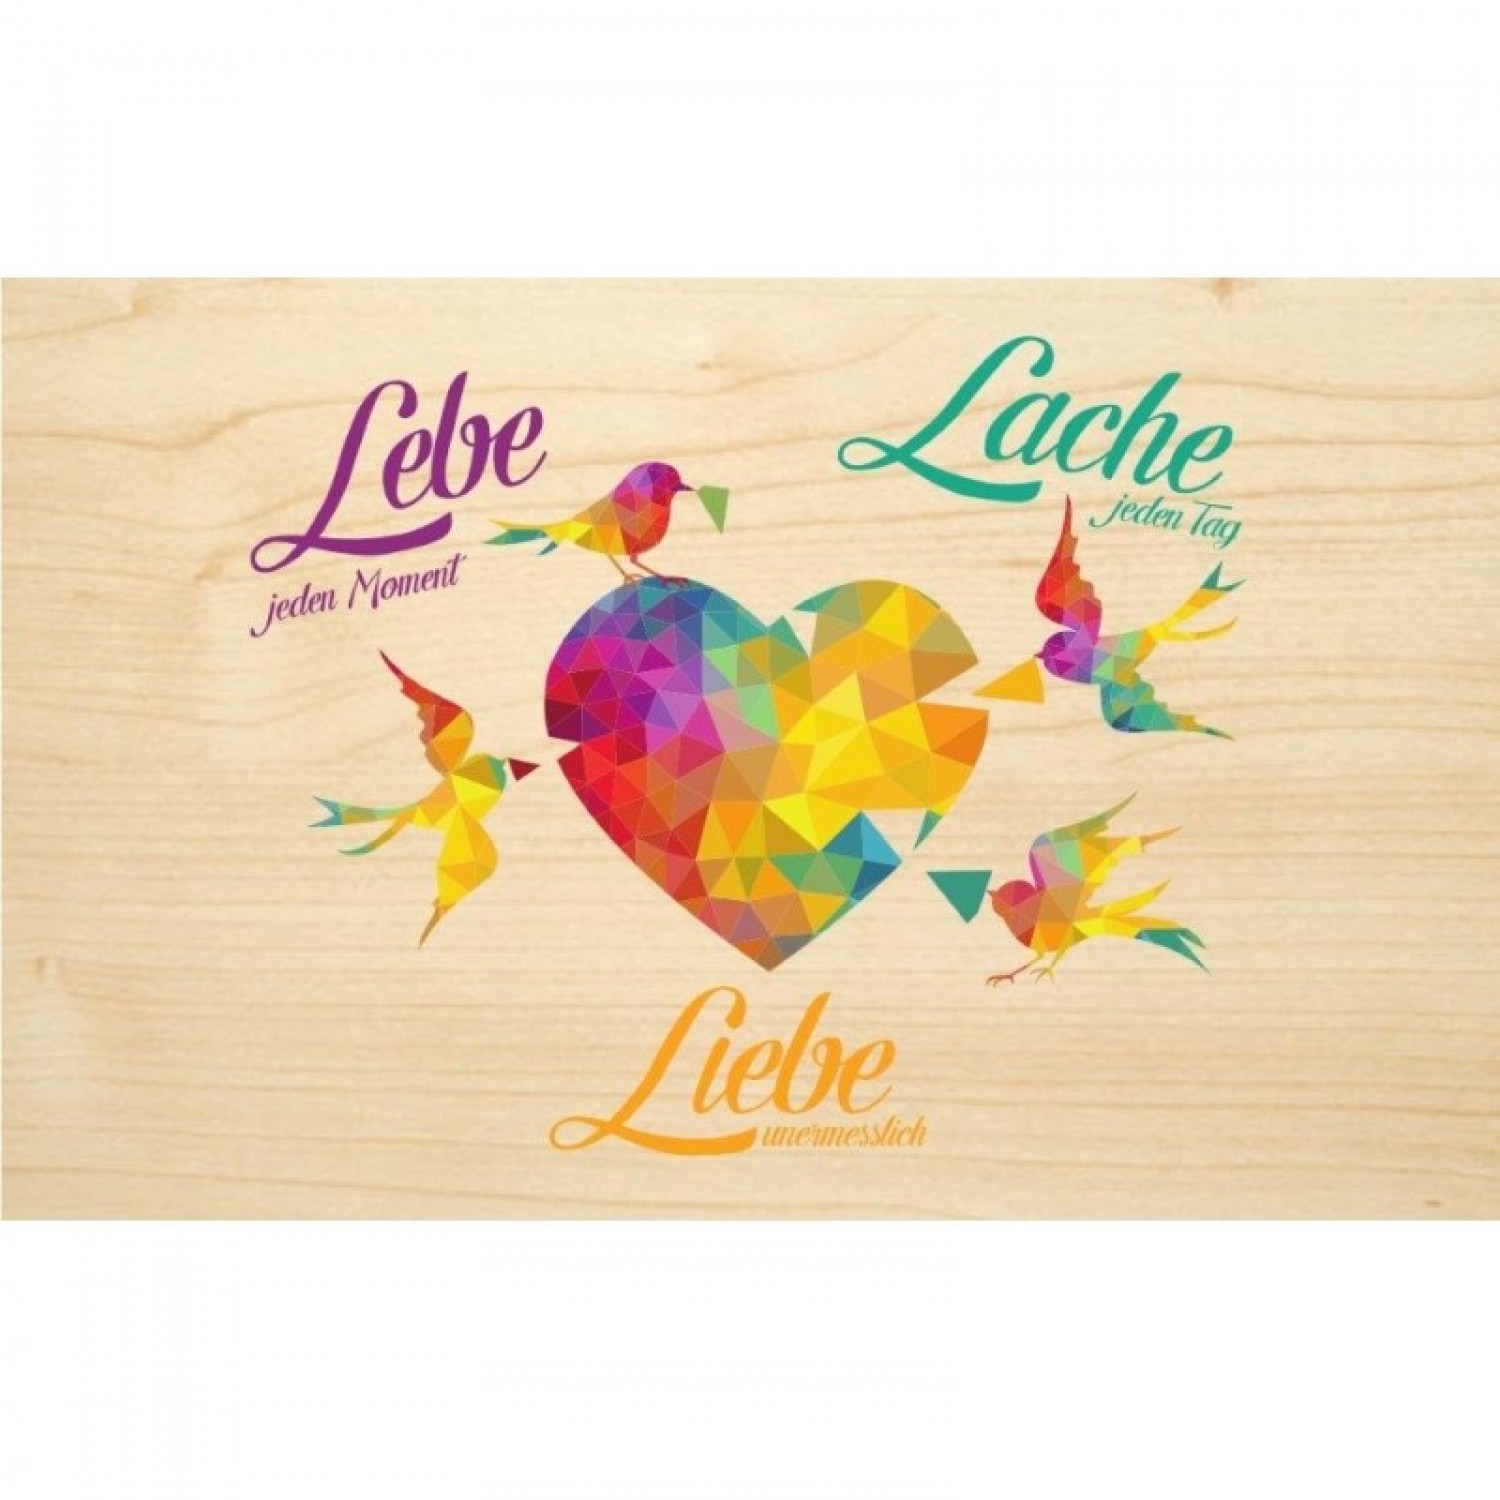 Lebe - Lache - Liebe Holzkarte - PEFC Buchenholz | Biodora